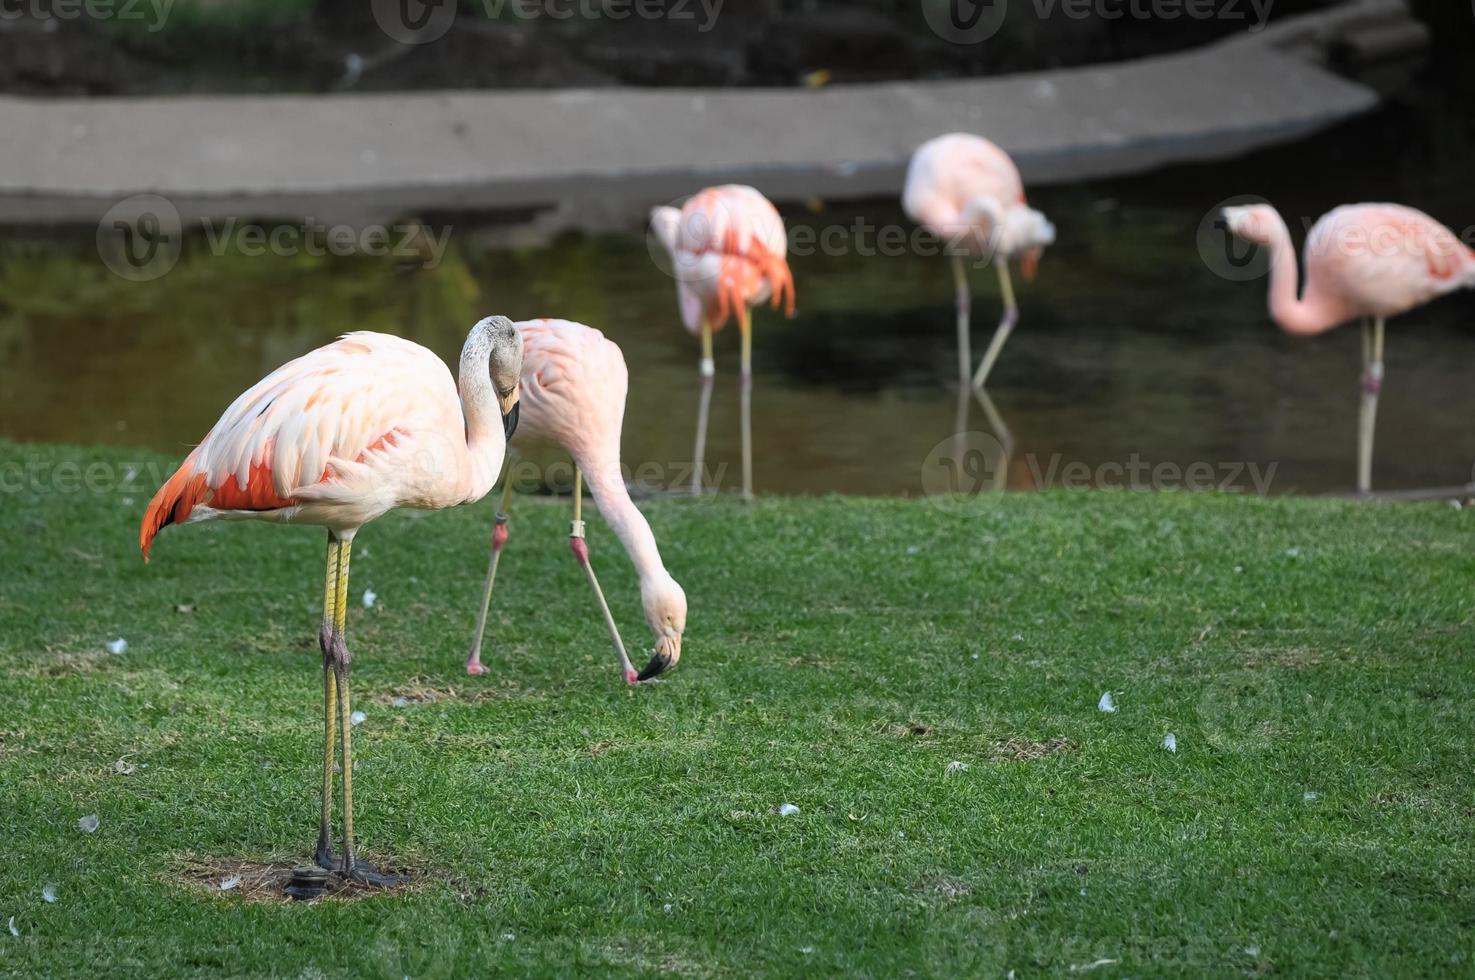 Flamingos in the zoo photo